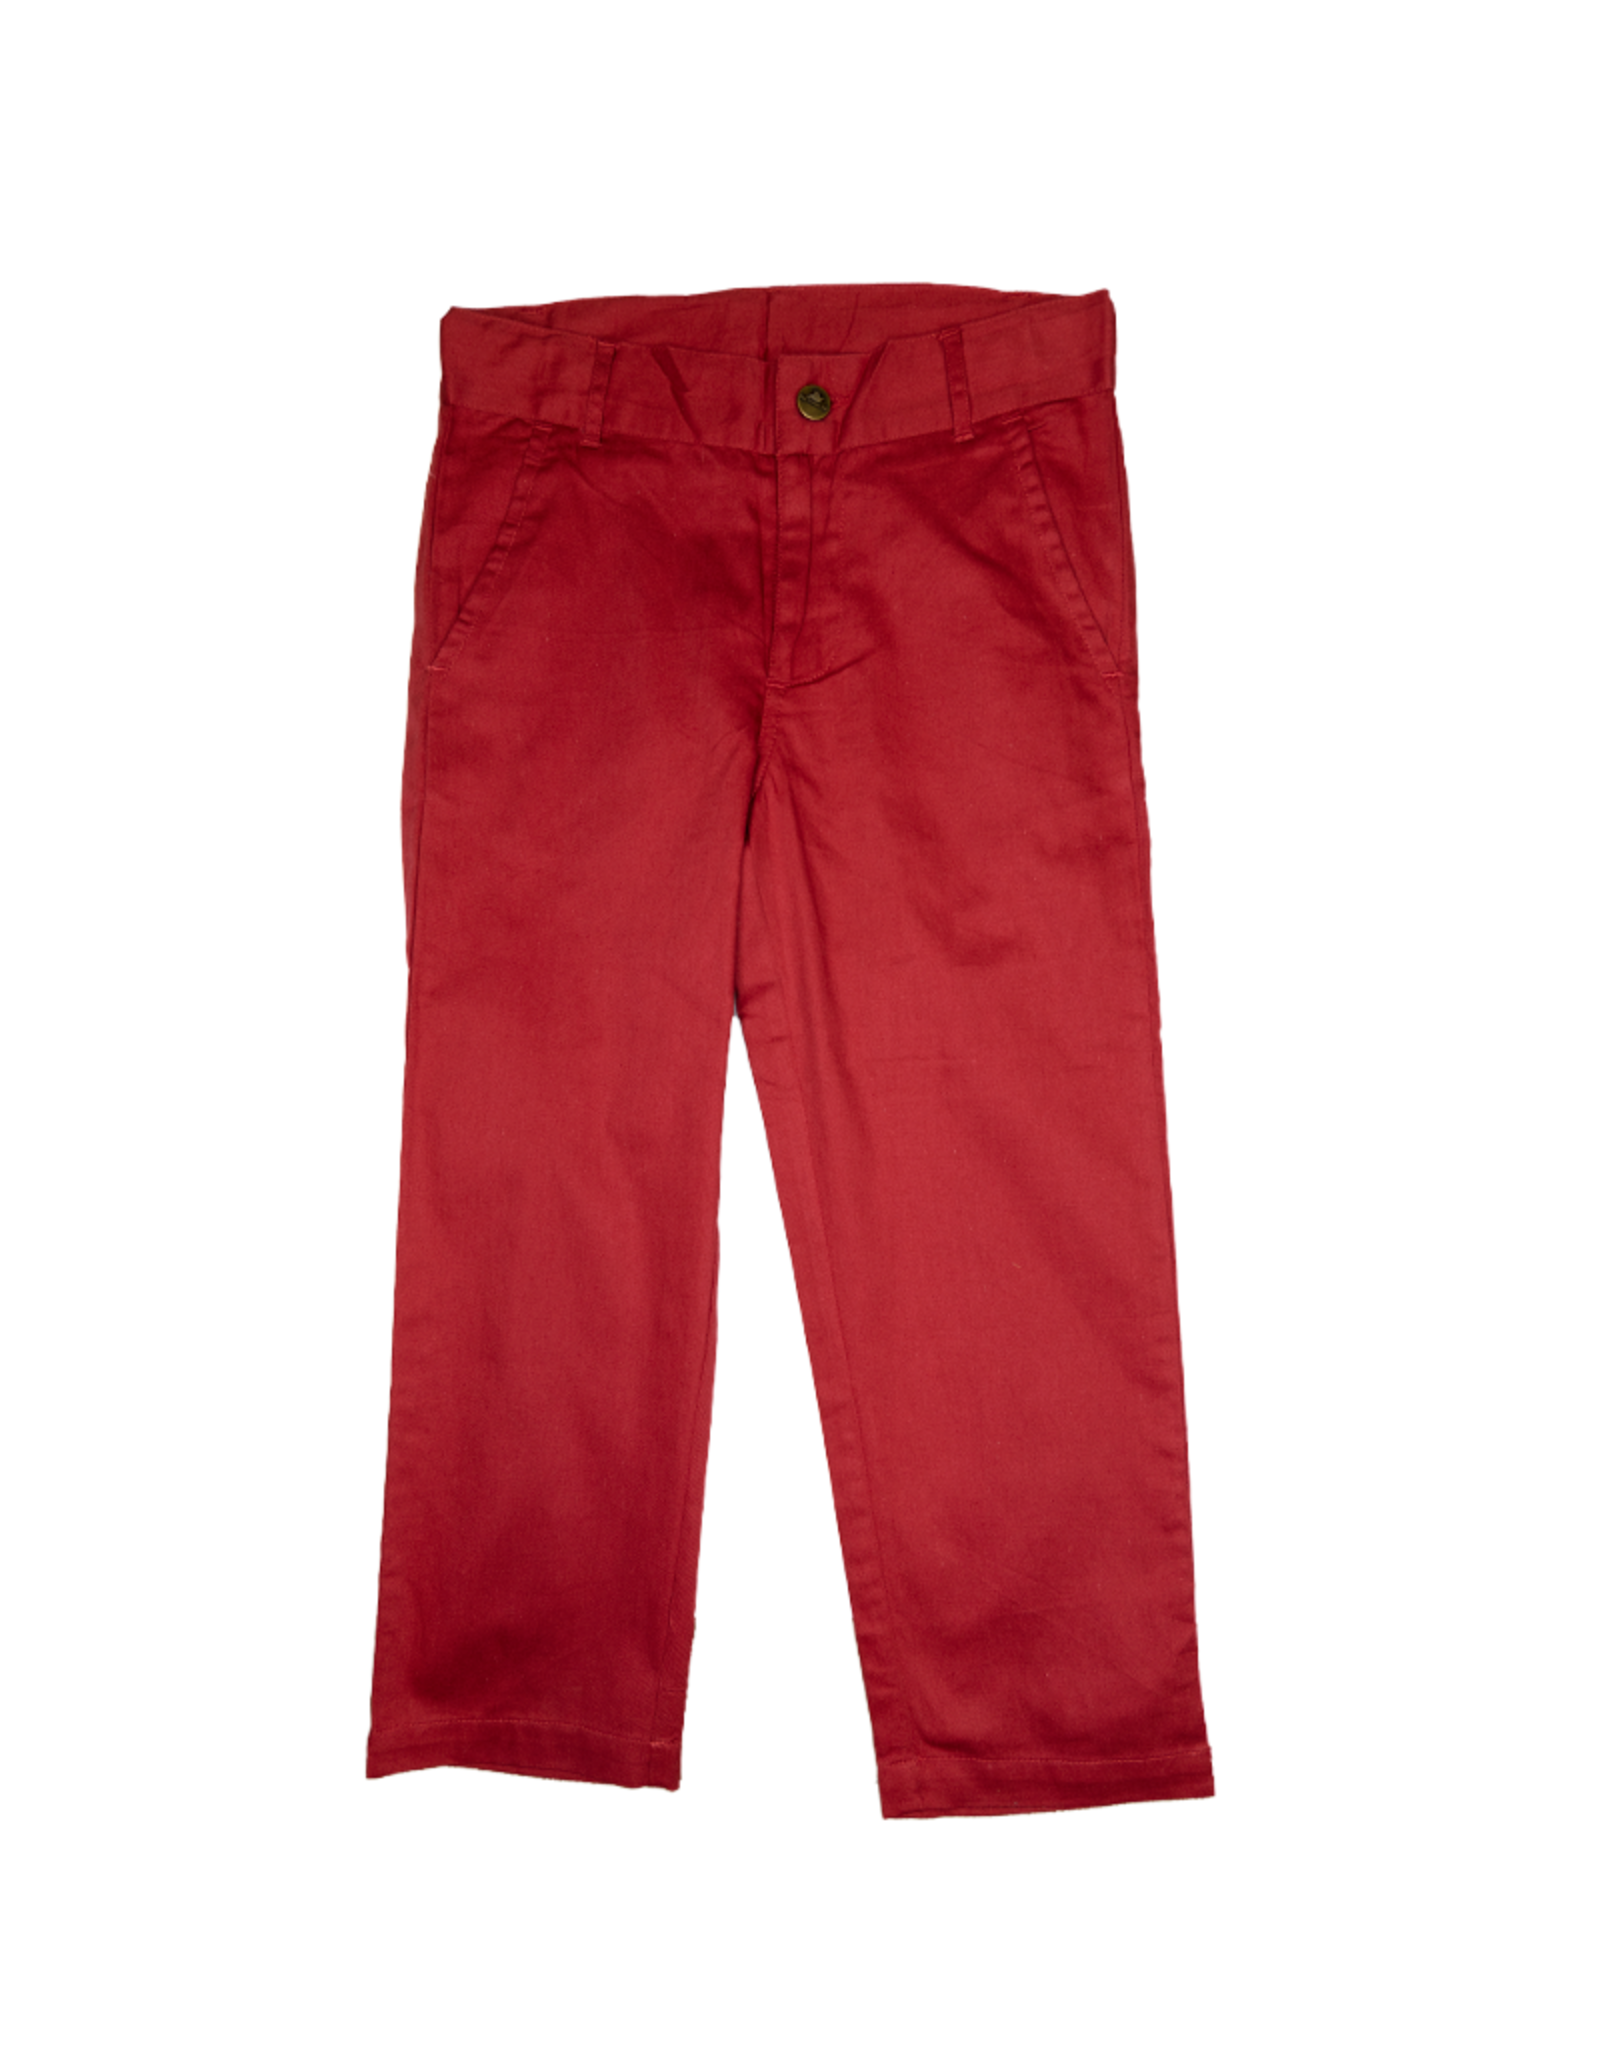 South Bound SBound Dress Pants 2511 Red